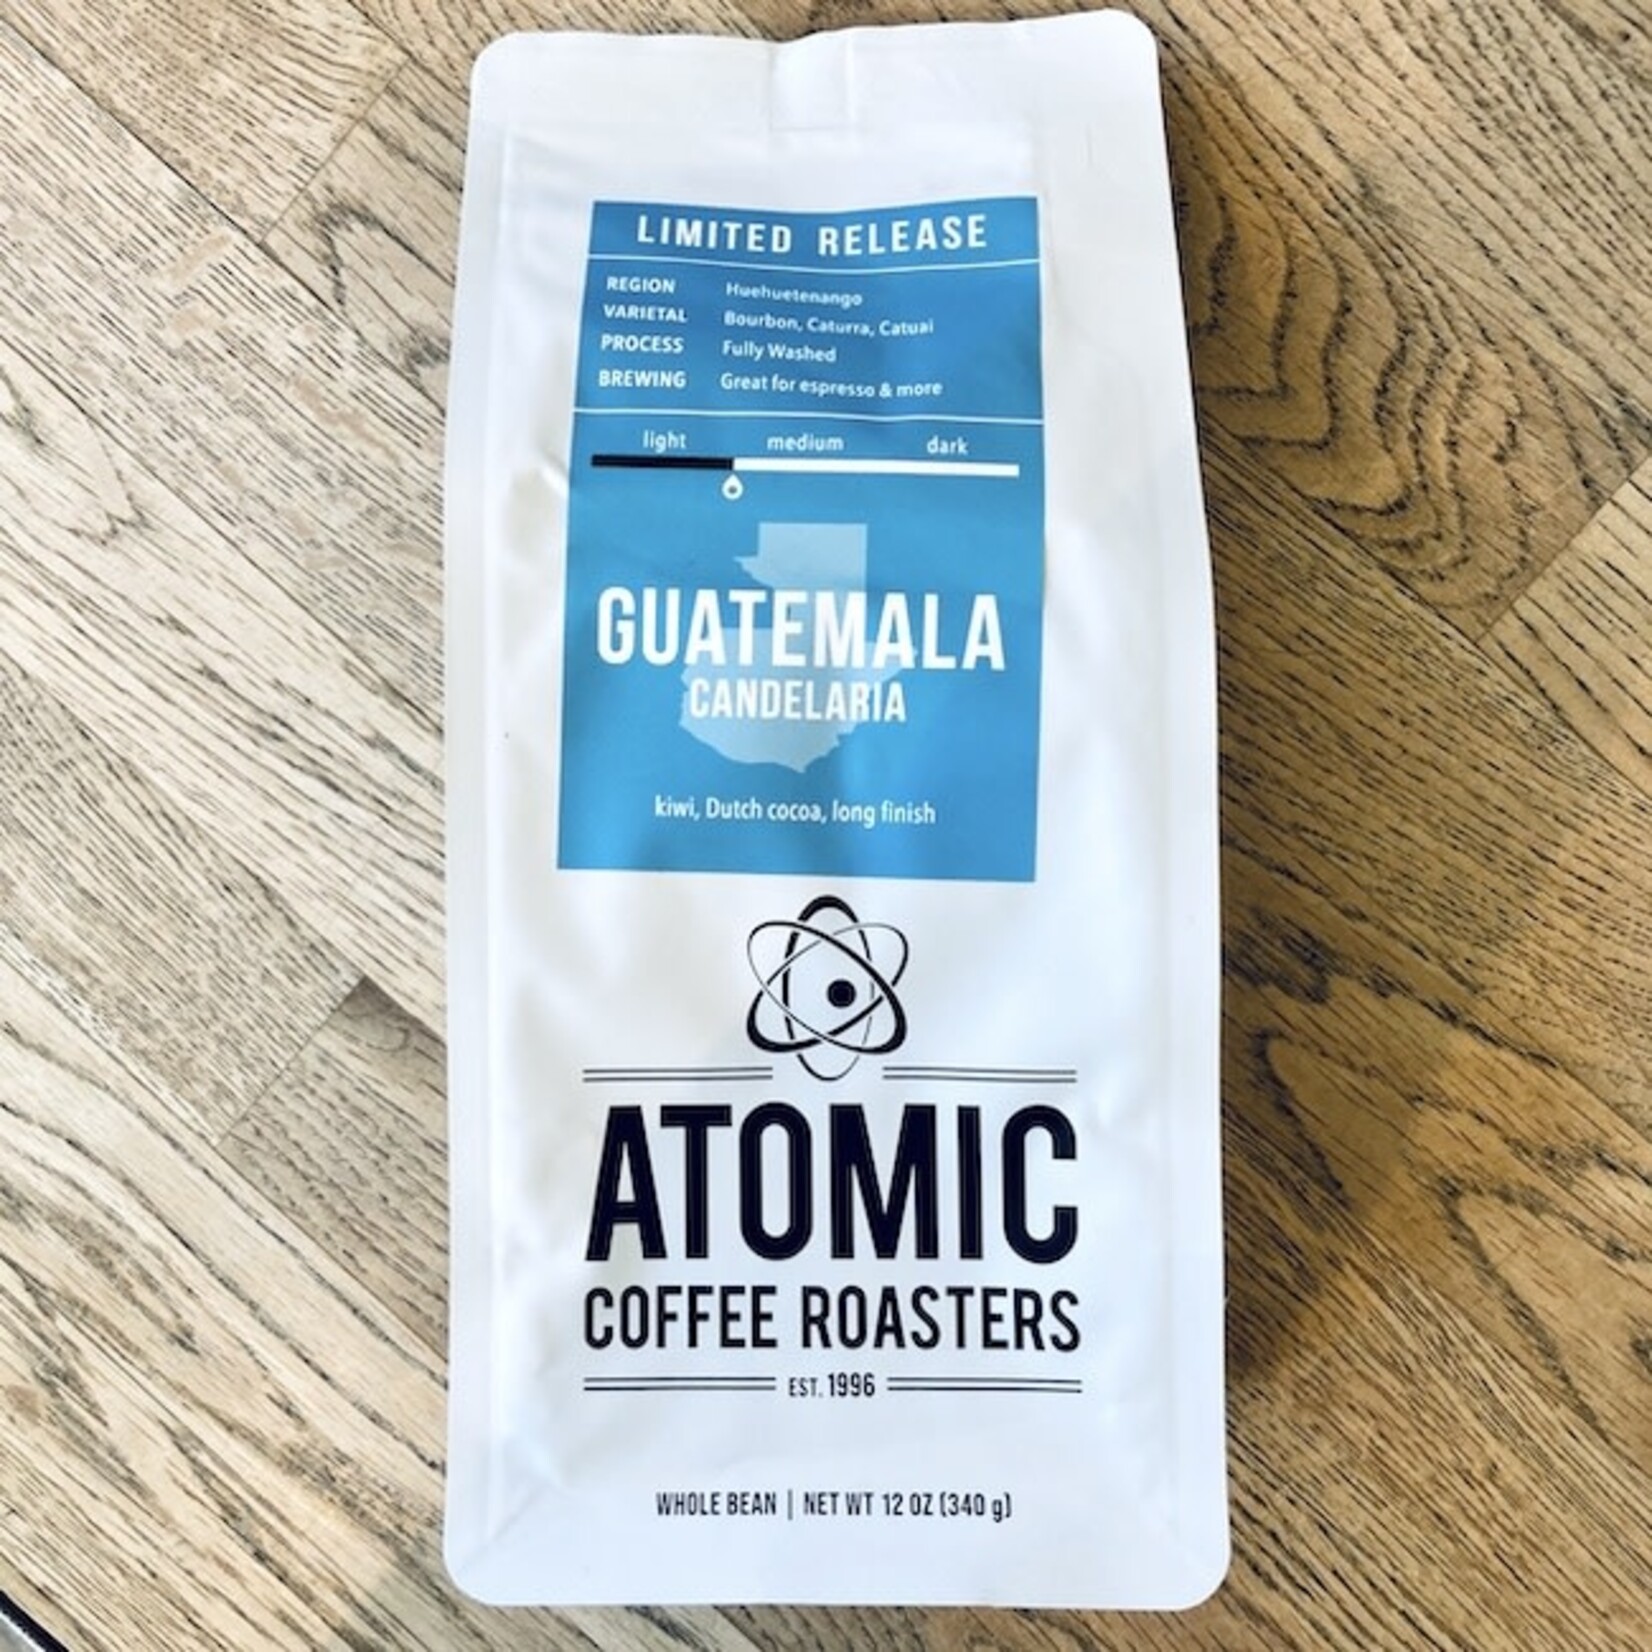 Atomic Coffee Roasters Single Origin Guatemala "Candelaria"